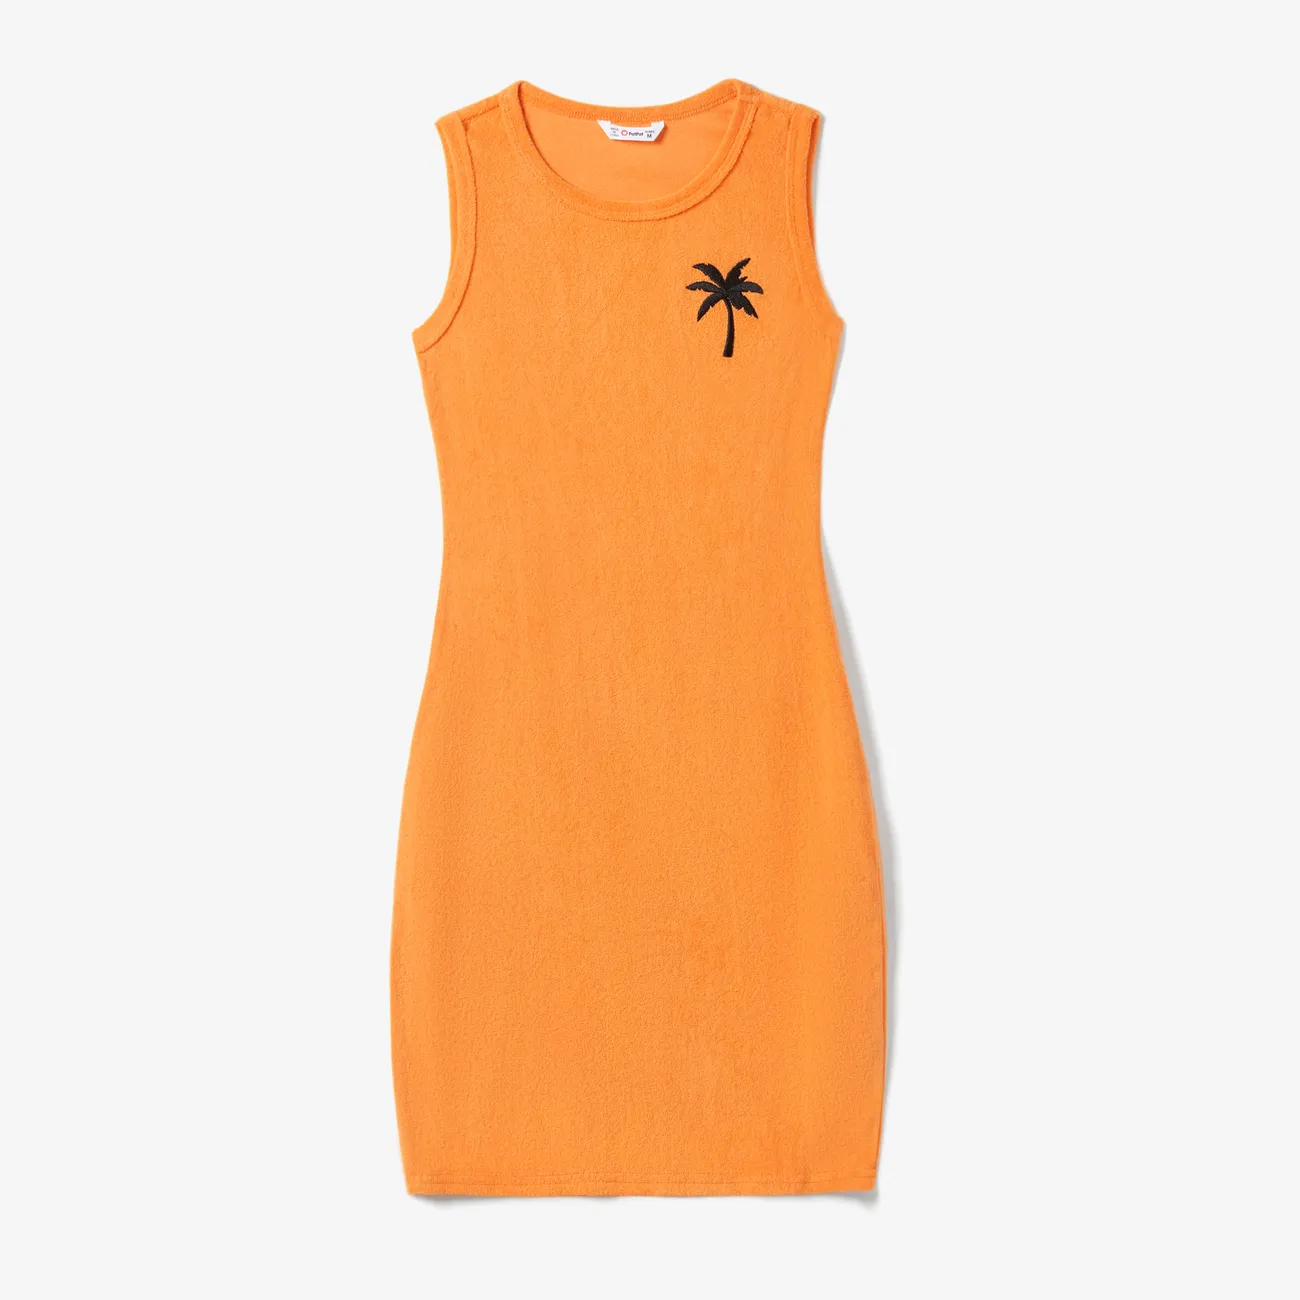 Family Matching Orange Terry Tank Top and Bodycon Tank Dress Sets Orangeyellow big image 1